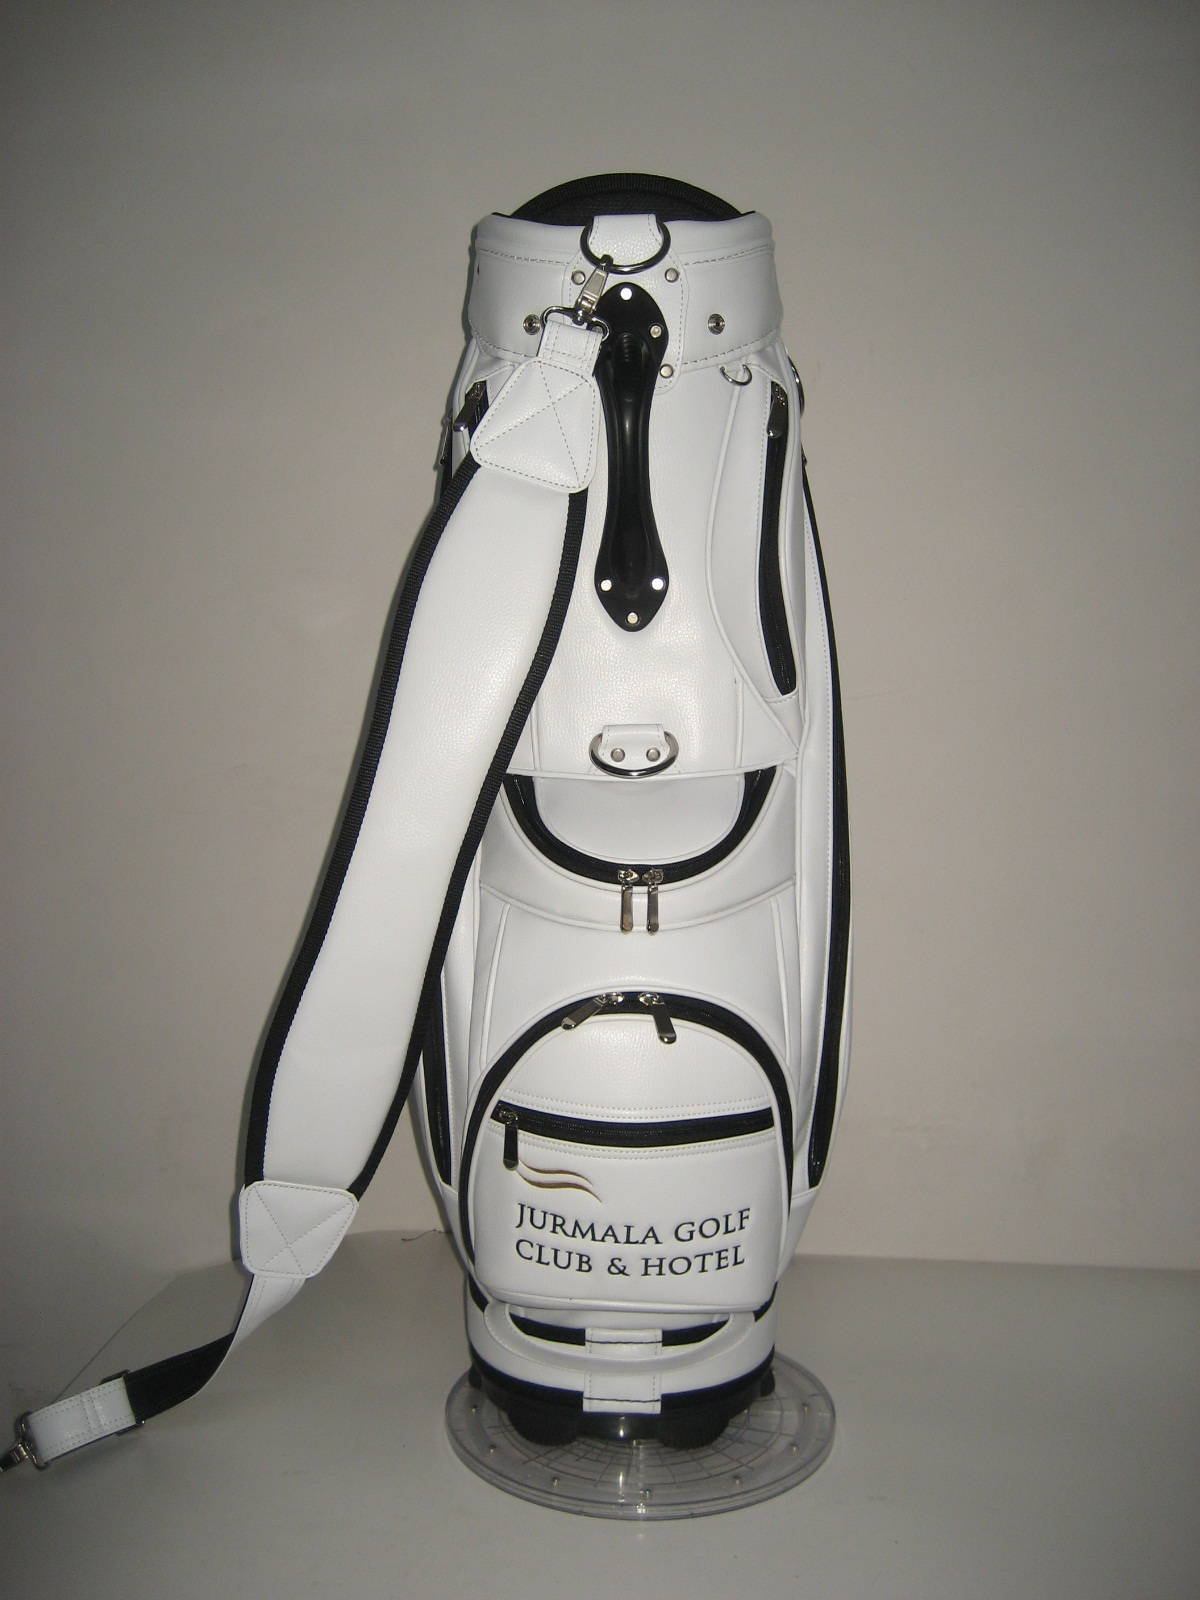 Customised football club golf bags by Golf Custom Bags 173